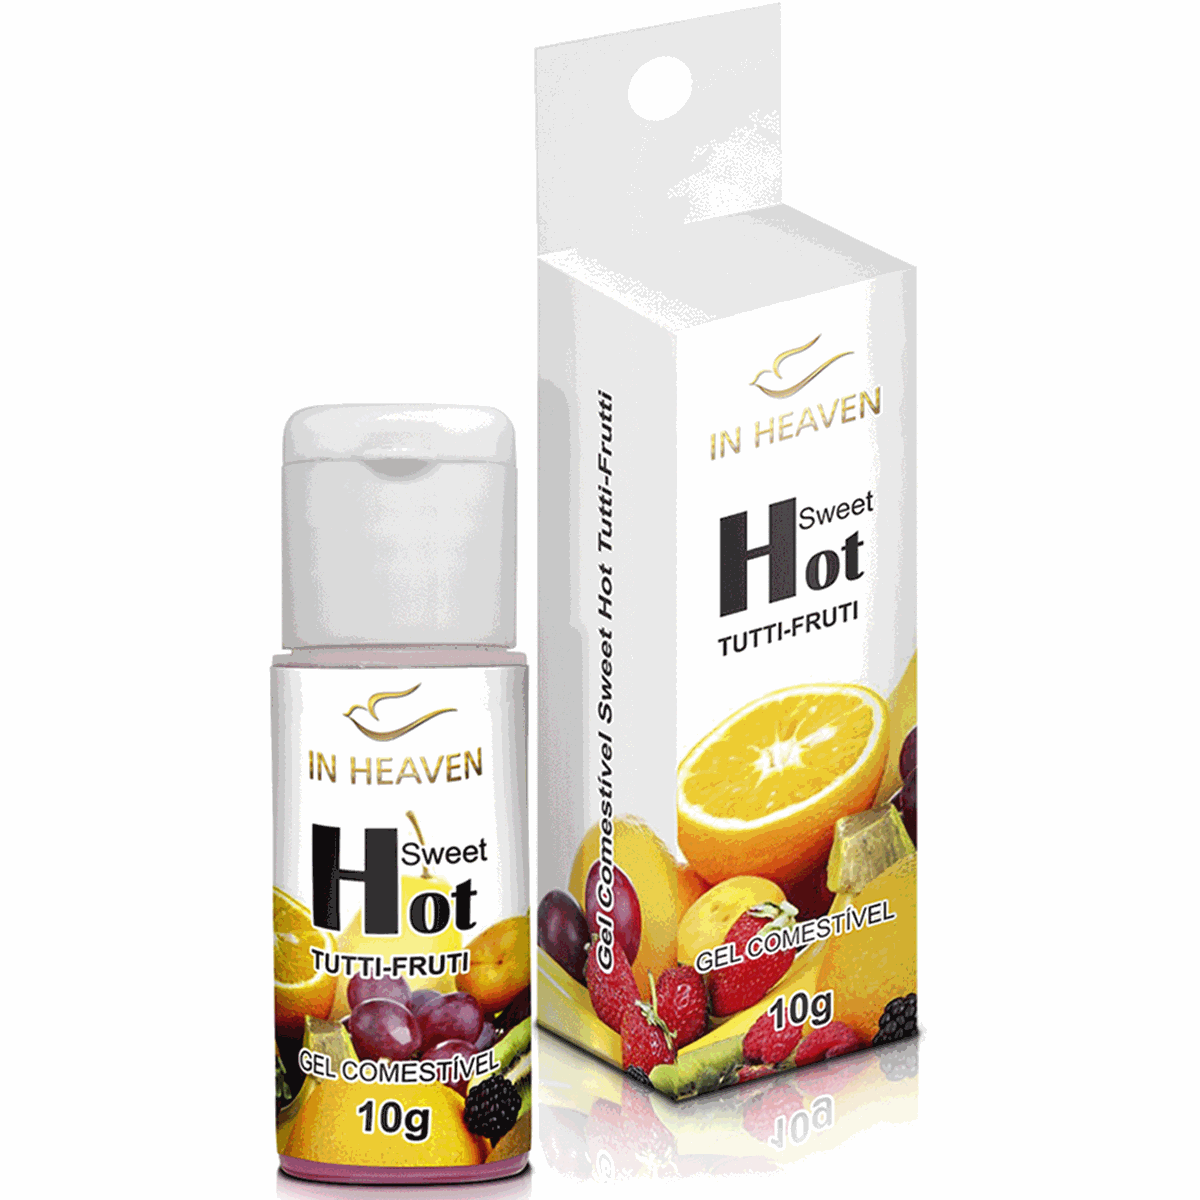 In Heaven Sweet Hot Tutti-Fruti 10g Gel Comestivel Linha Erótica para Evangélicos Intt